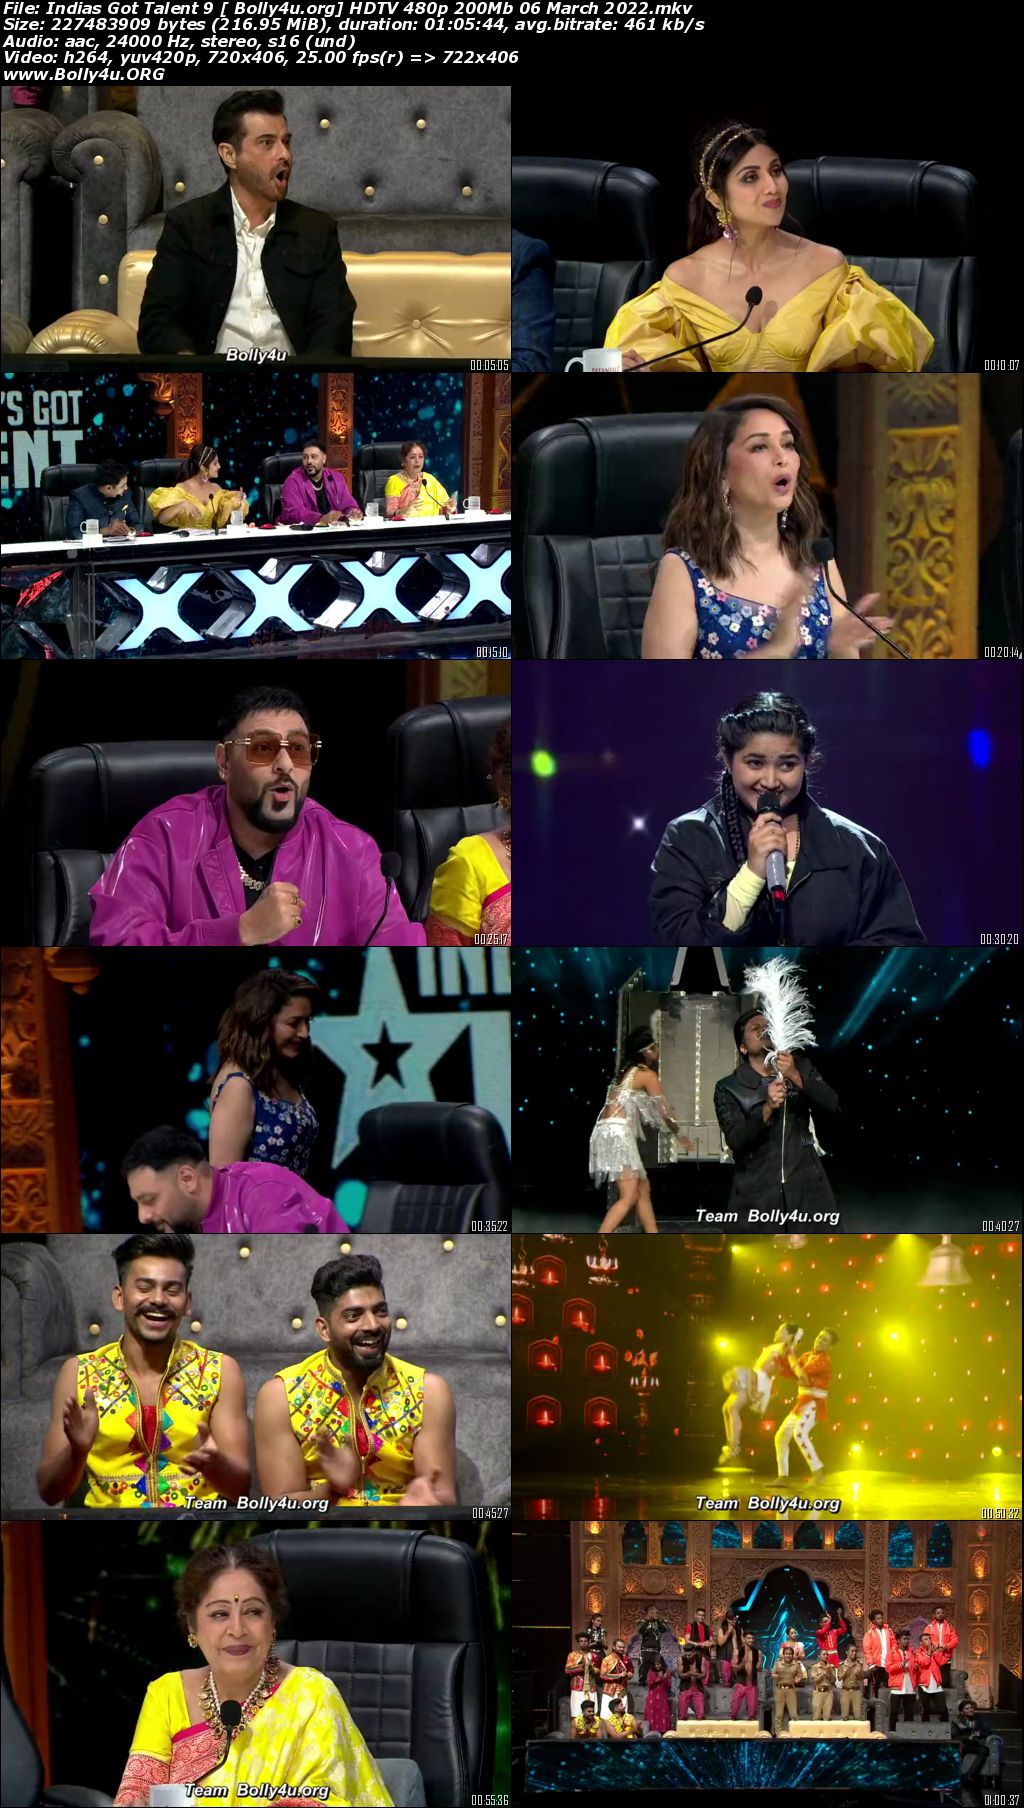 Indias Got Talent 9 HDTV 480p 200Mb 06 March 2022 Download